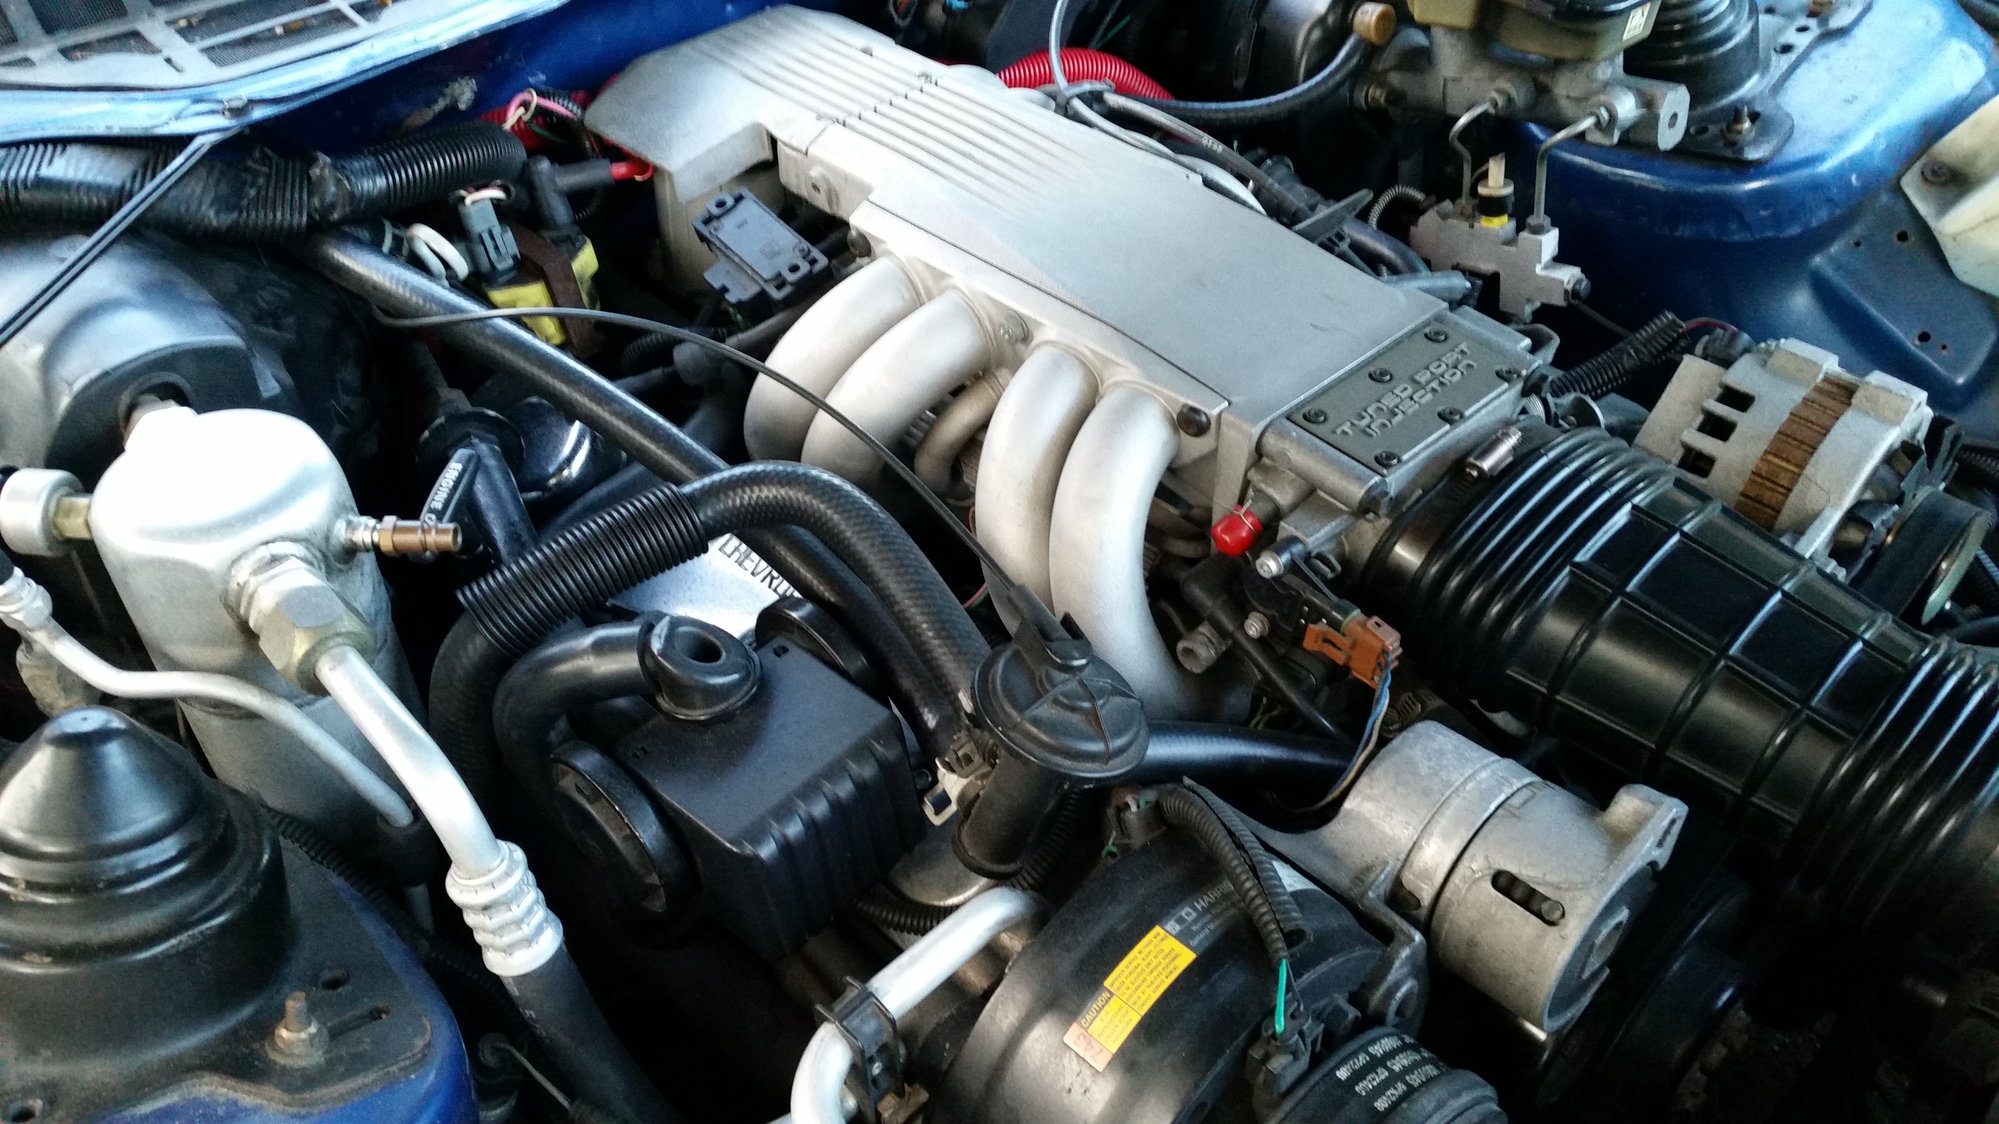 Gallery of Corvette L98 Engine.